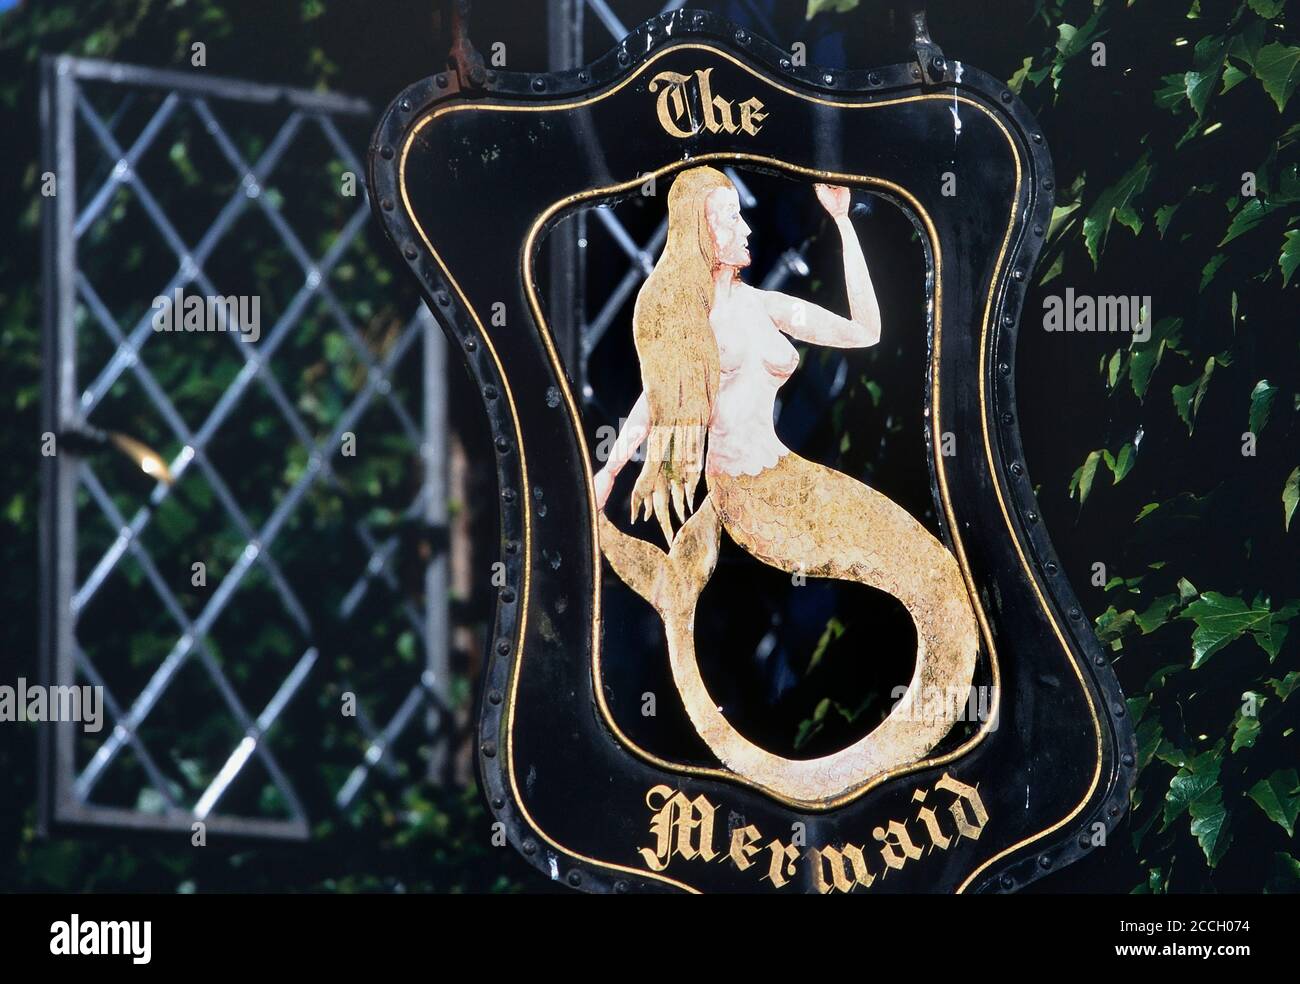 The Mermaid Inn sign, Rye, East Sussex, England, UK Stock Photo